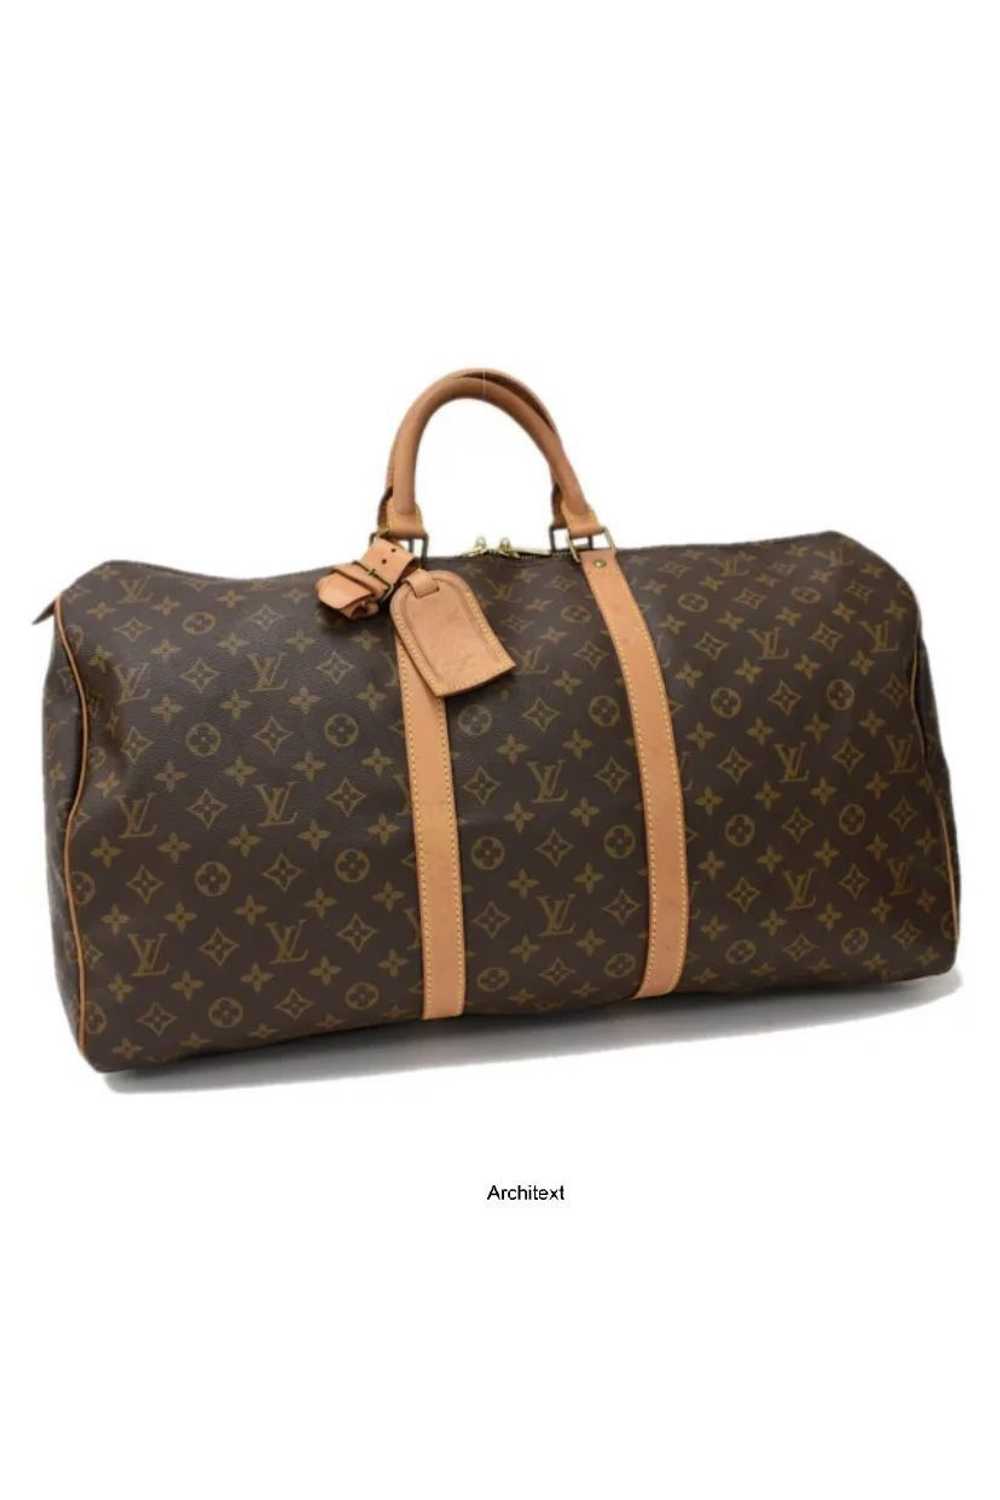 Louis Vuitton Keepall 55 Duffle Bag - image 1